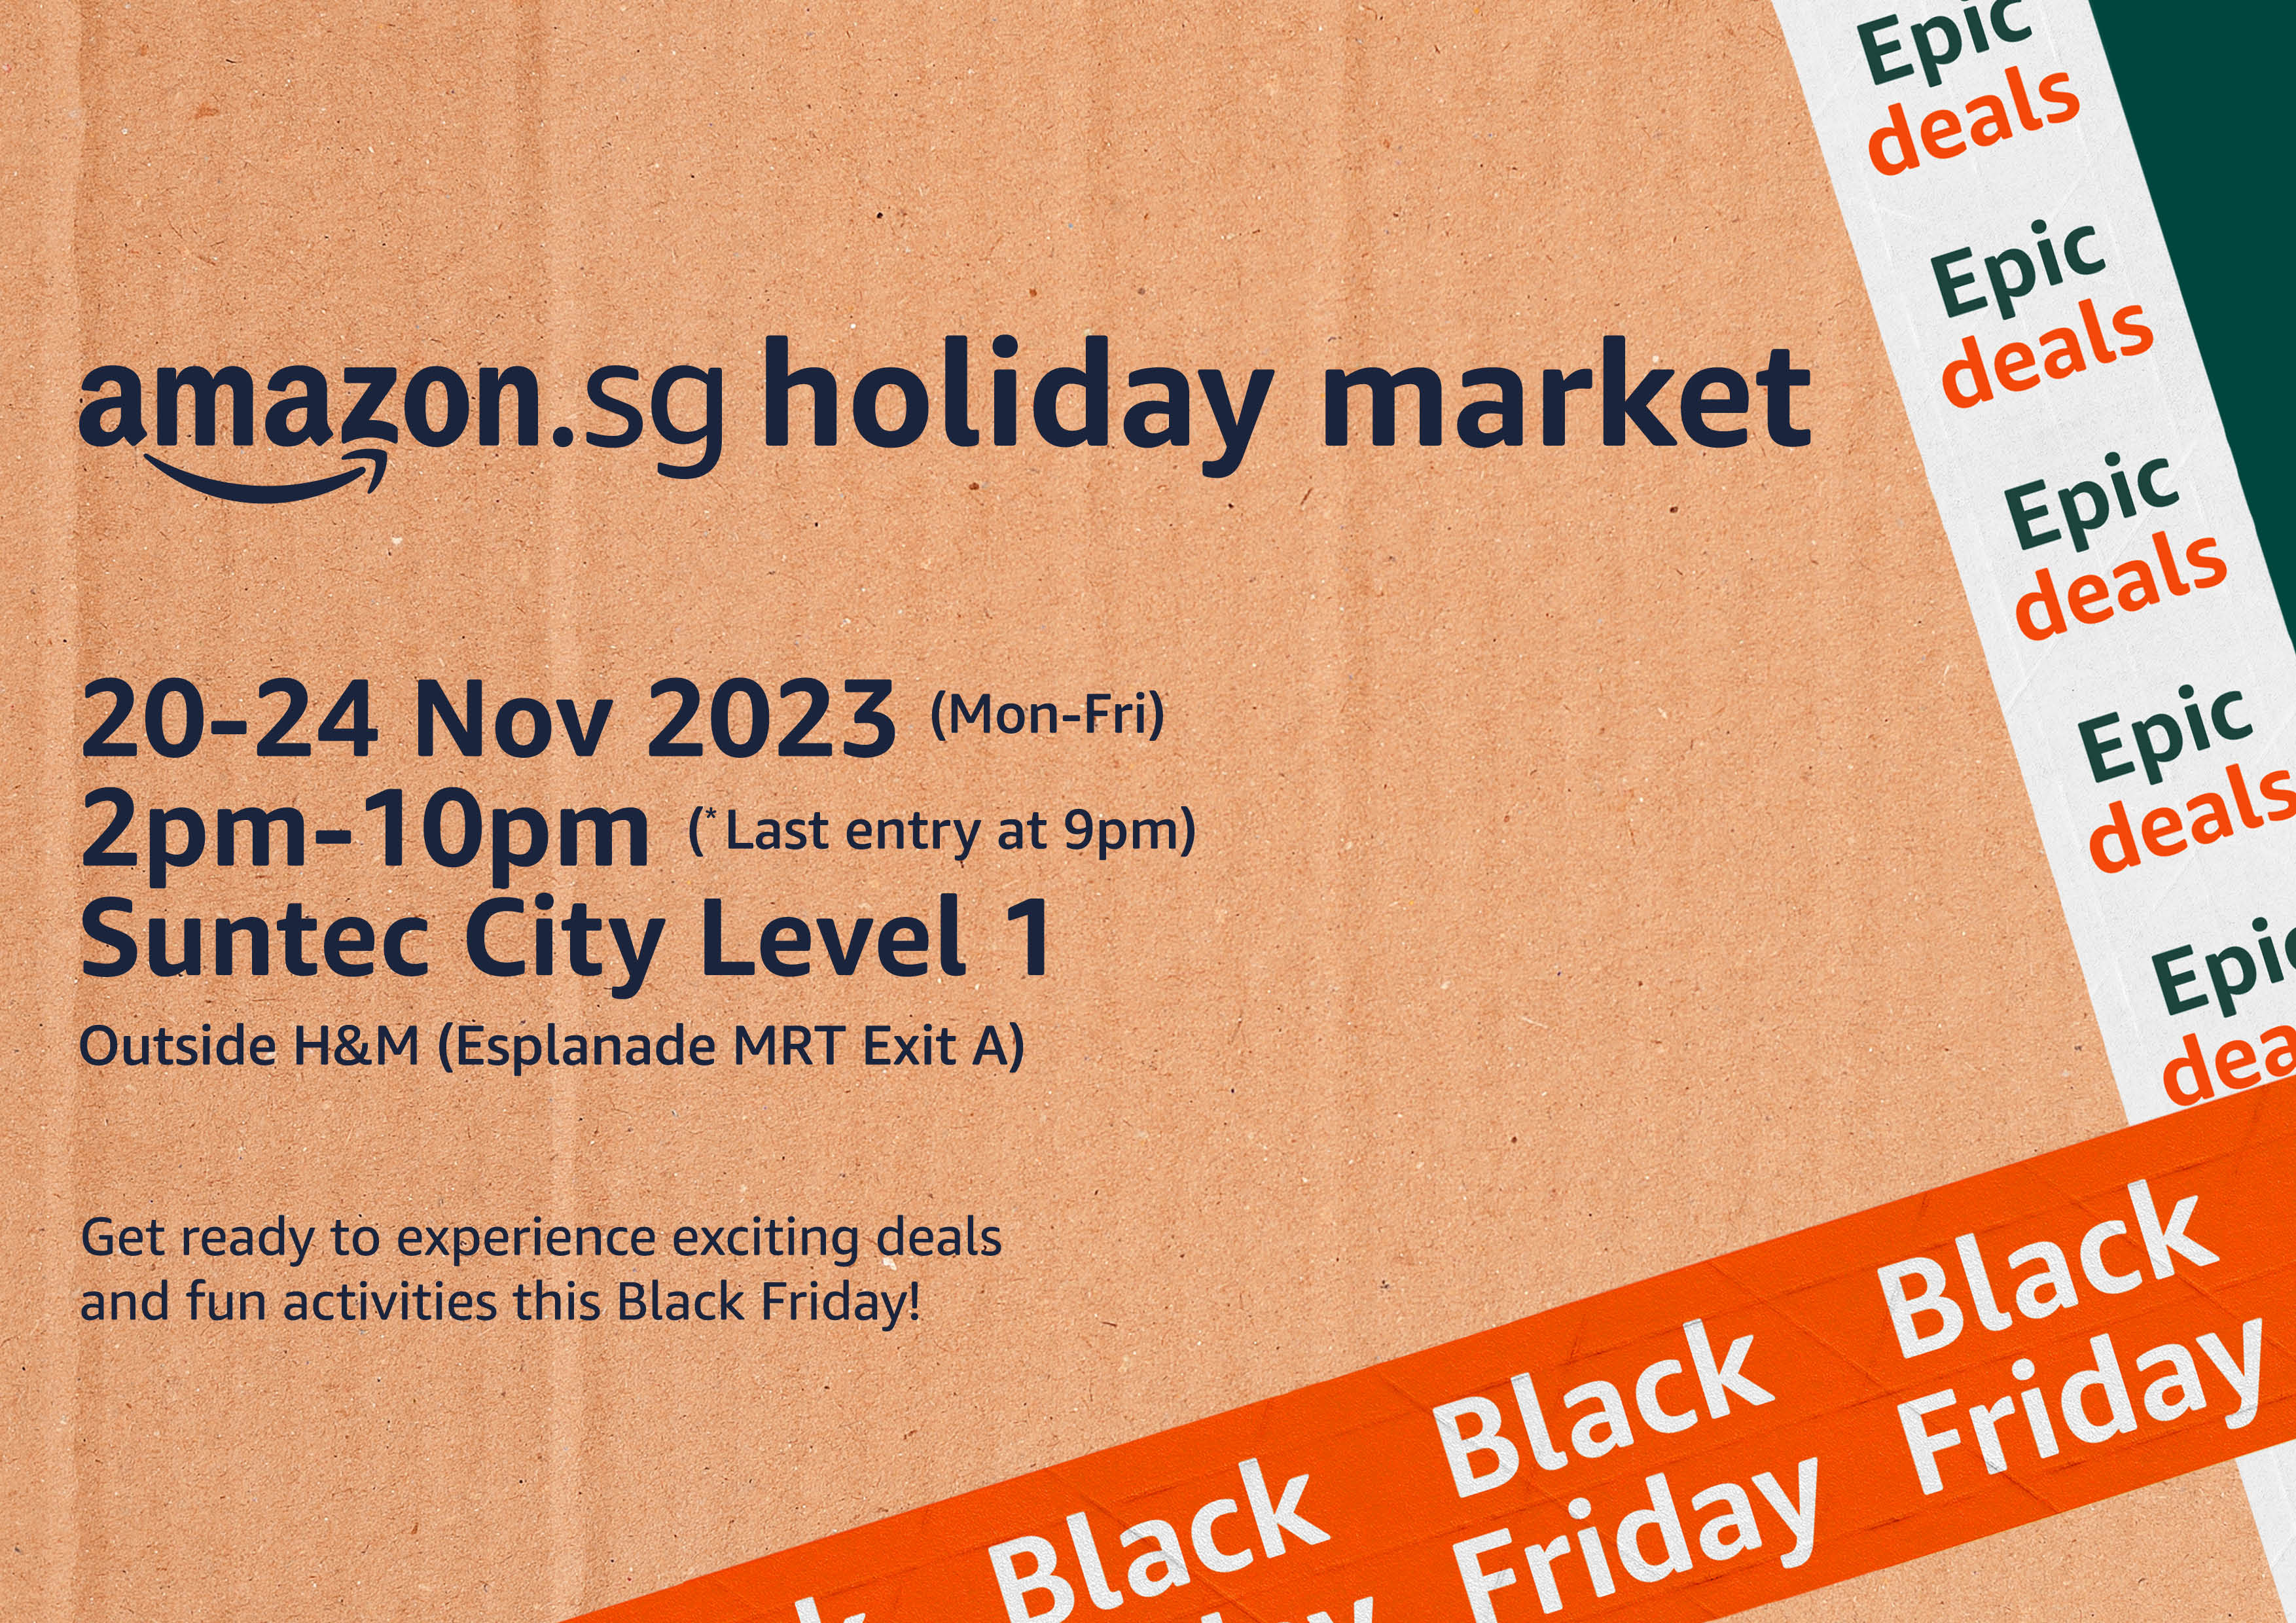 Amazon.sg holiday market banner 1 .jpg